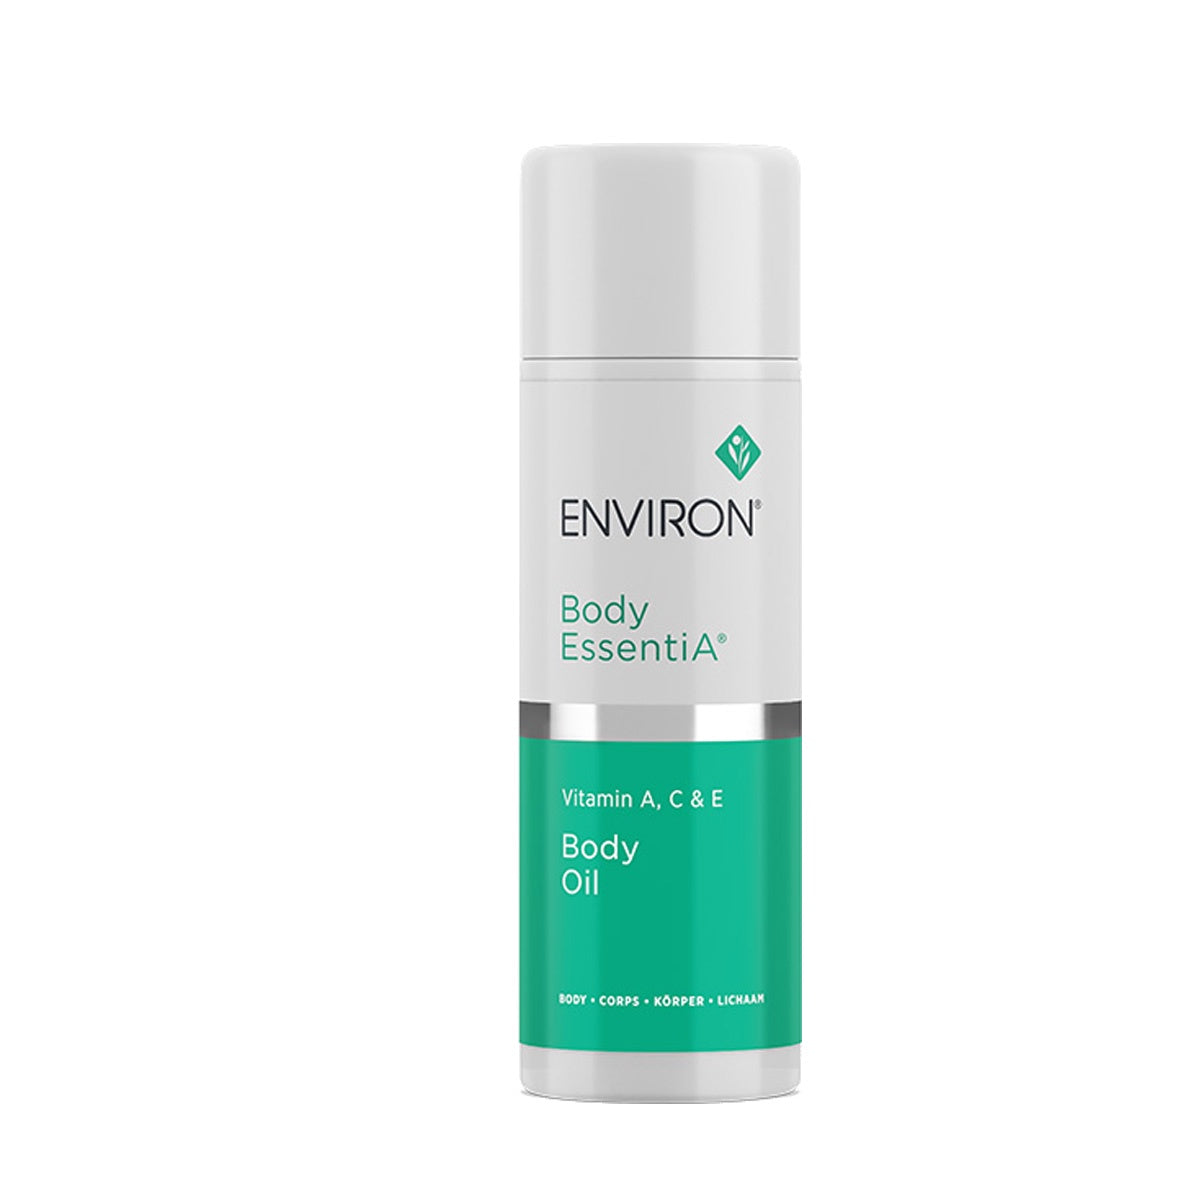 ENVIRON (Body EssentiA) - Body Oil